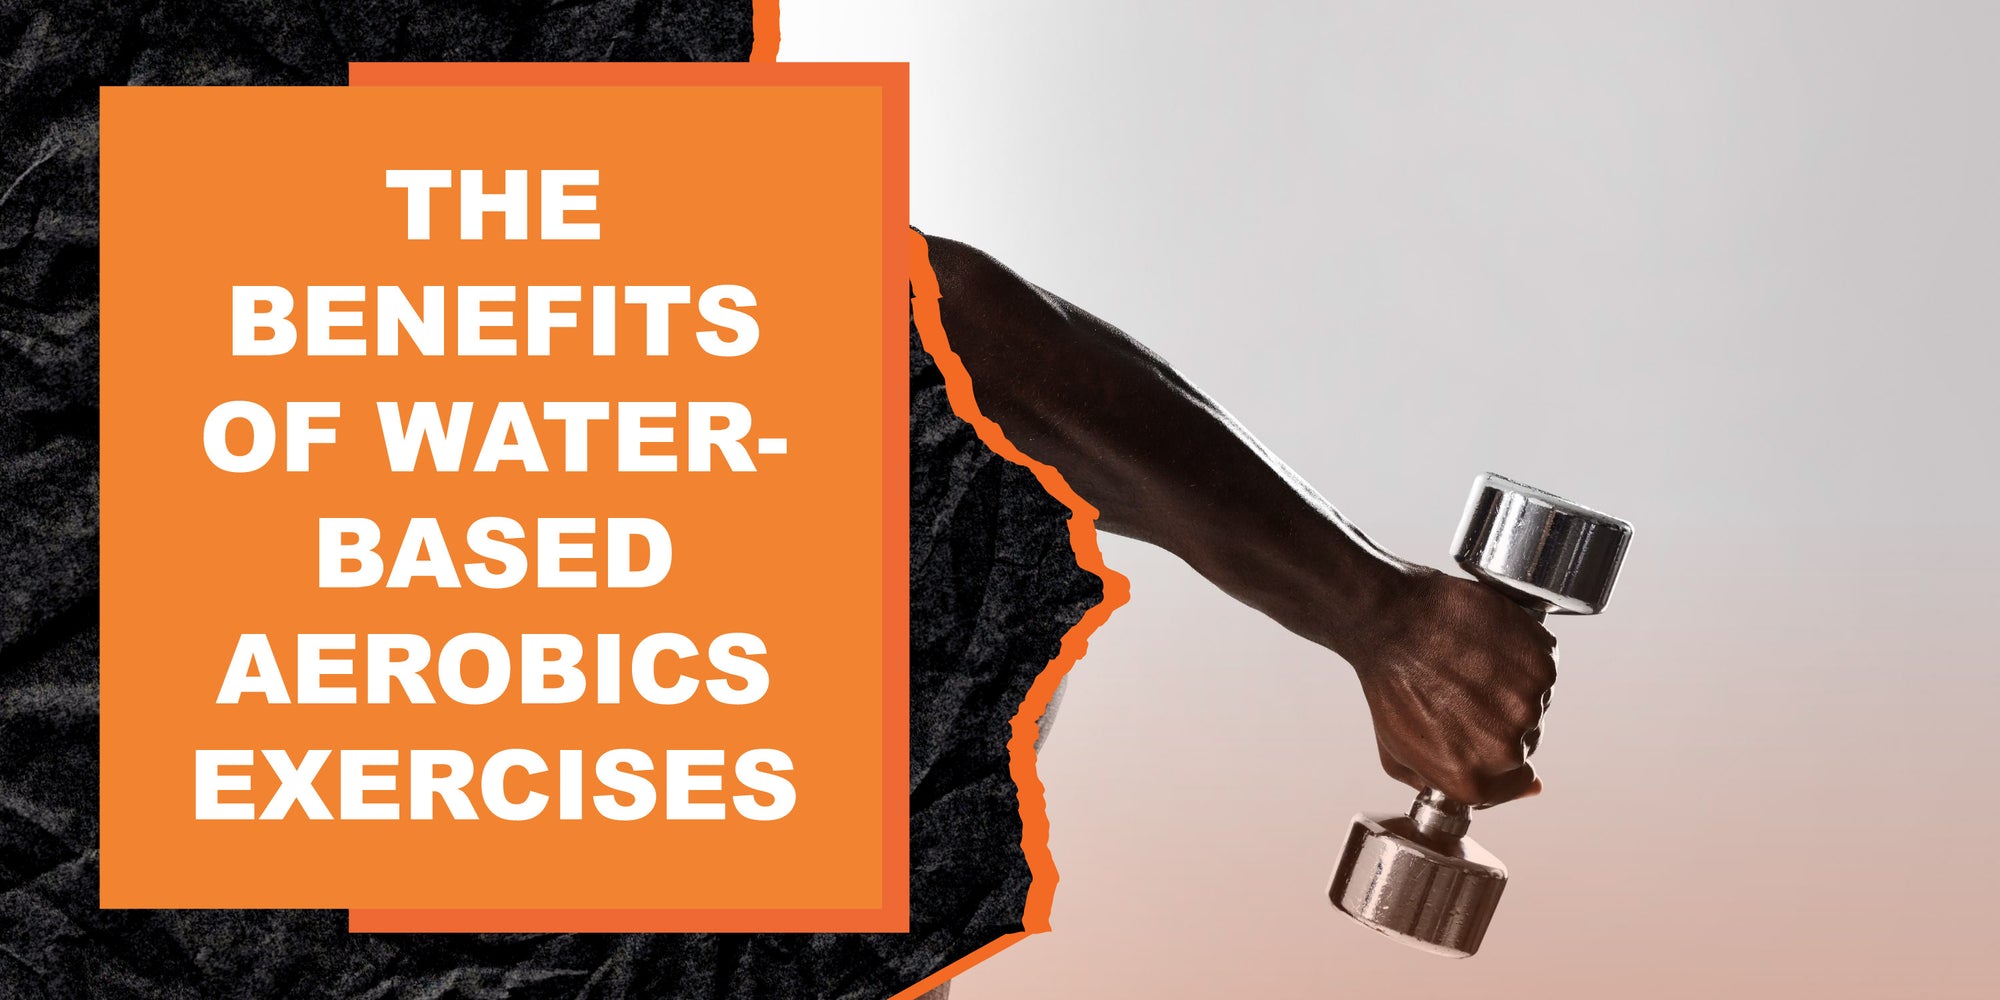 The Benefits of Water-Based Aerobics Exercises